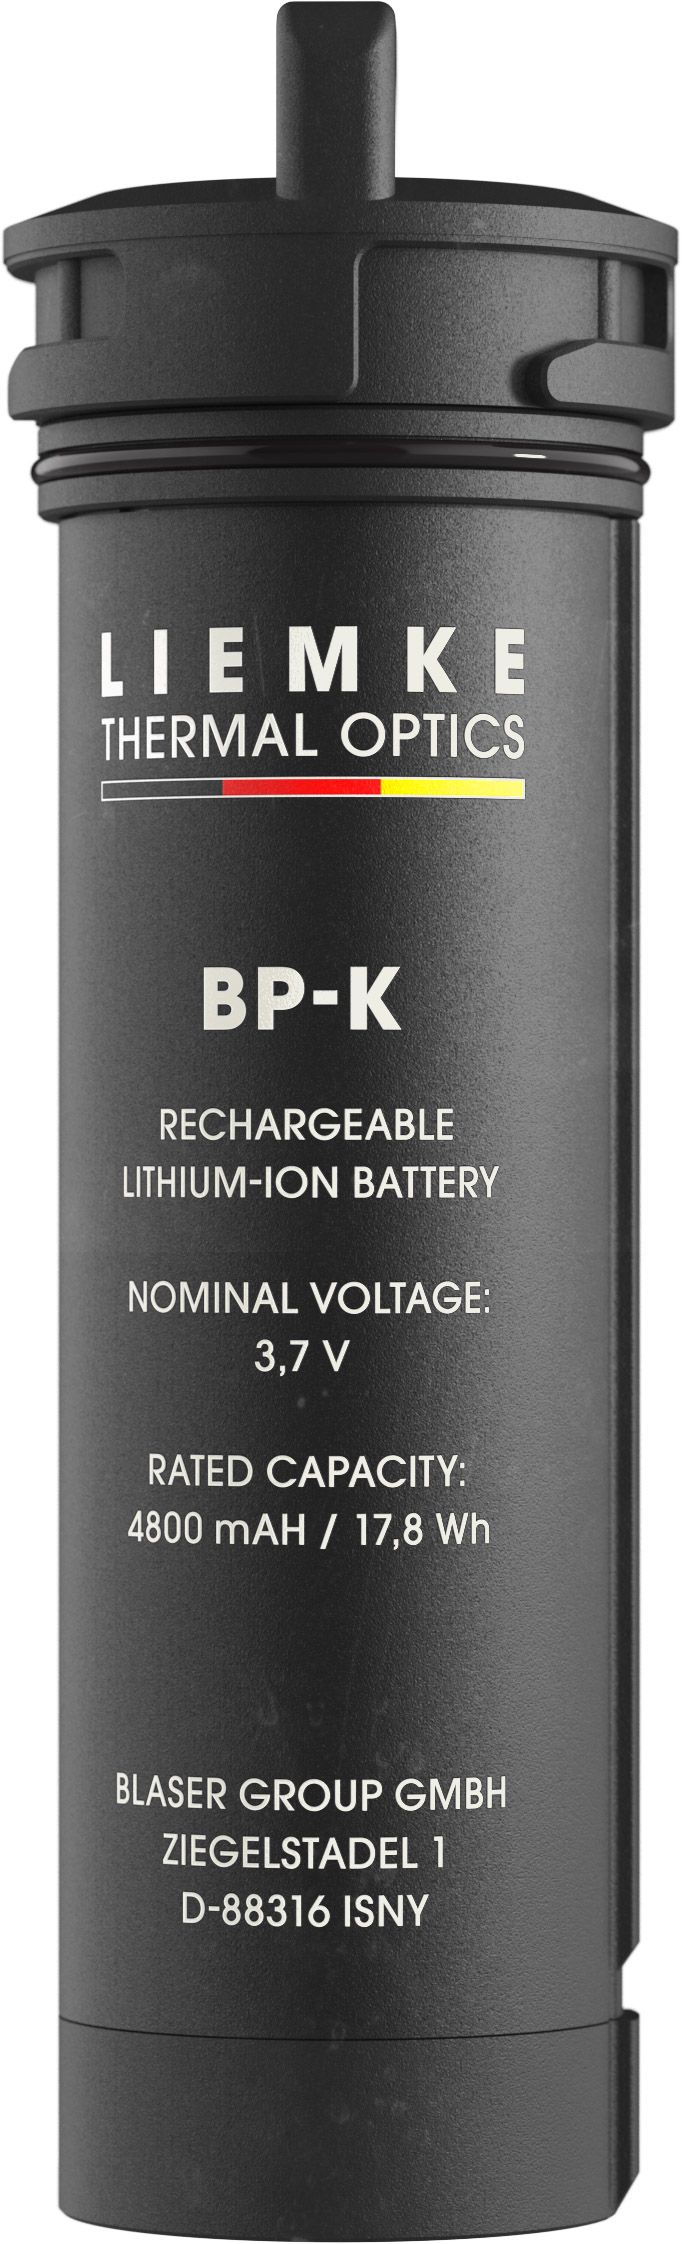 Liemke Batteriepack BP-K Wechselakku